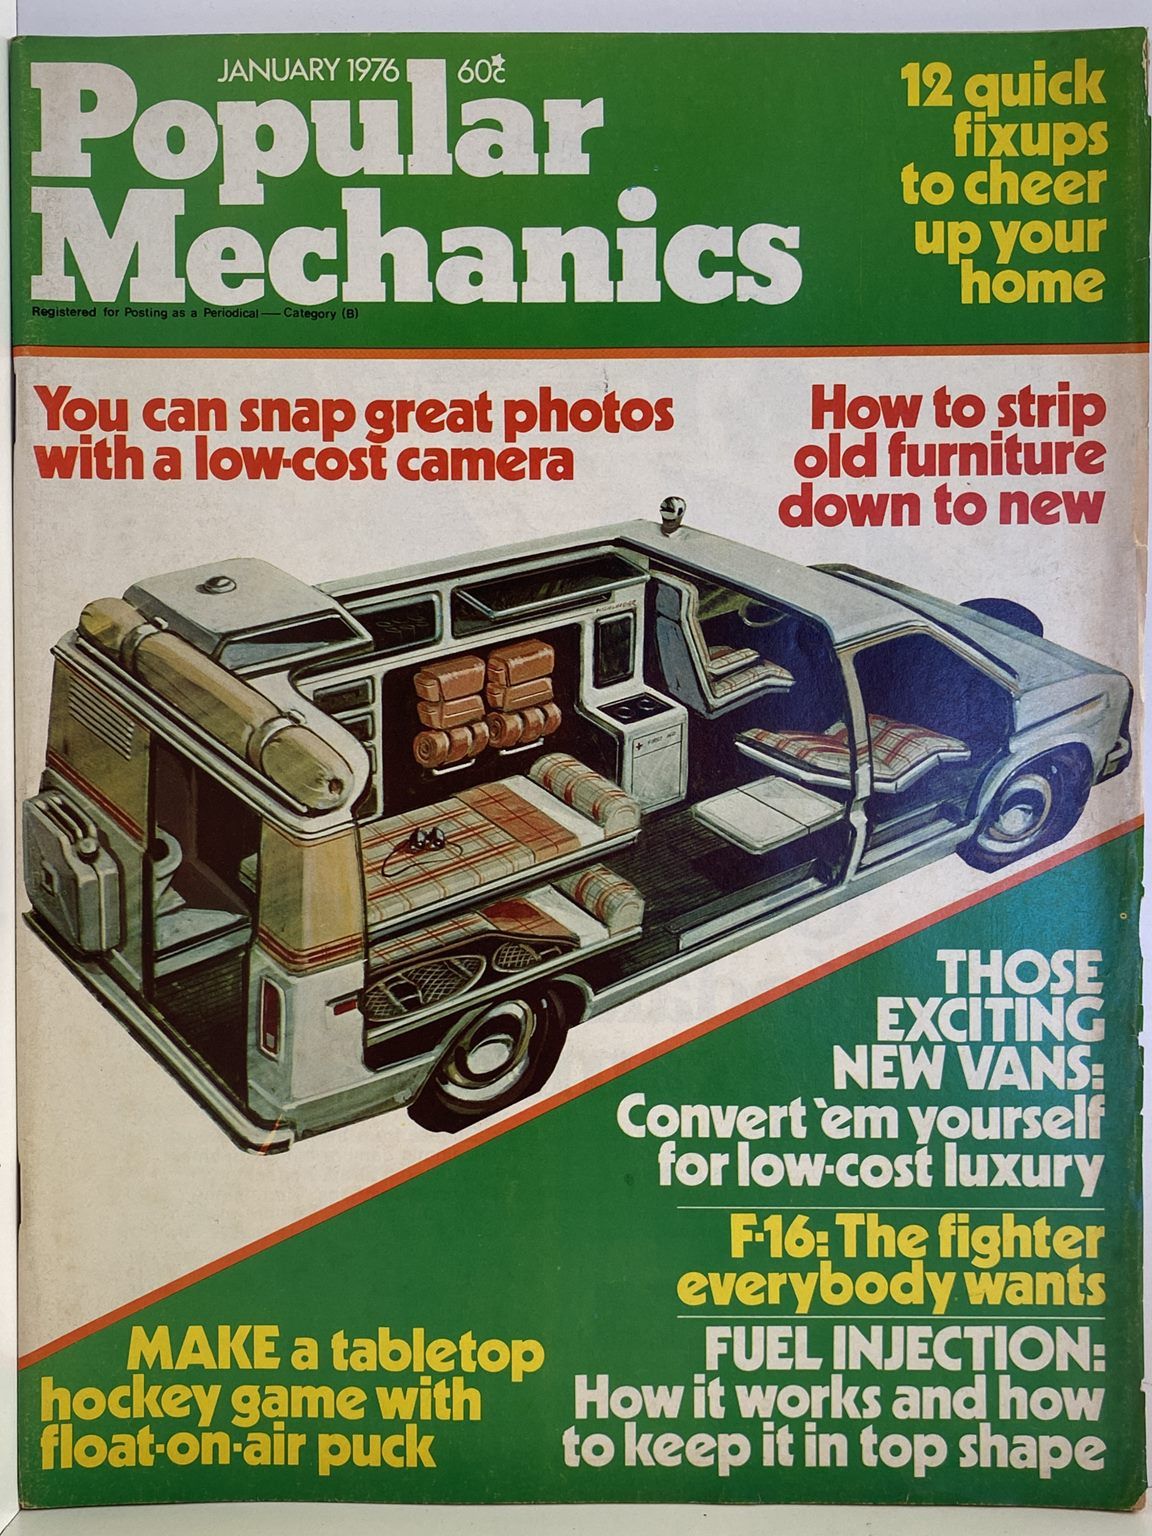 VINTAGE MAGAZINE: Popular Mechanics - Vol. 144, No. 5 - January 1976